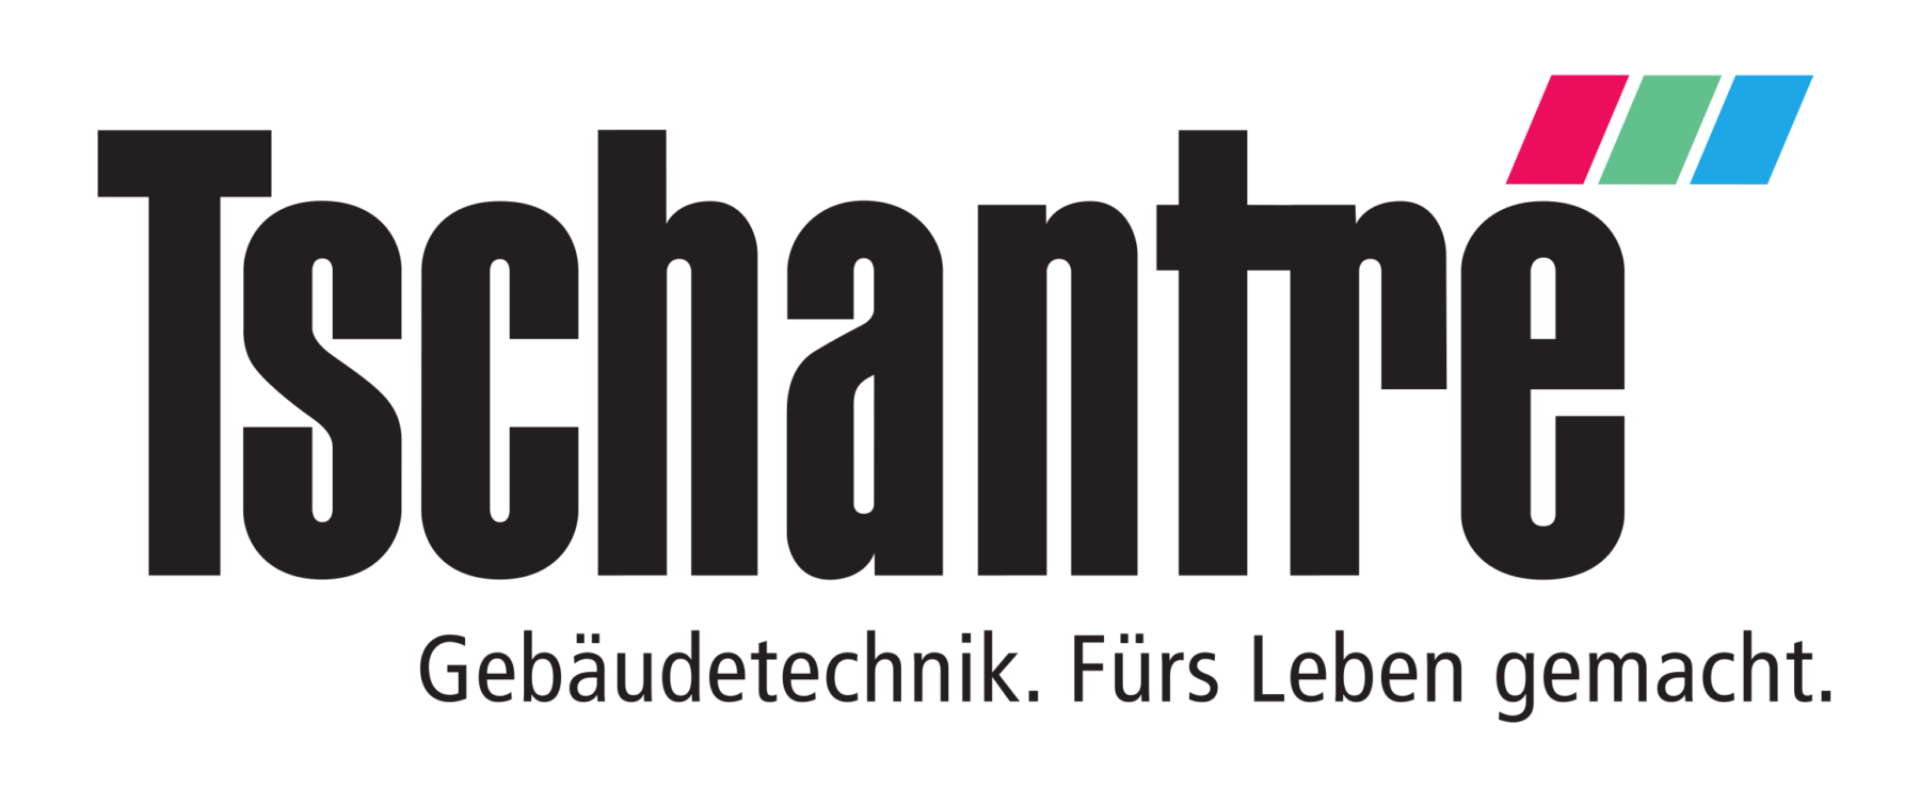 Tschantré logo